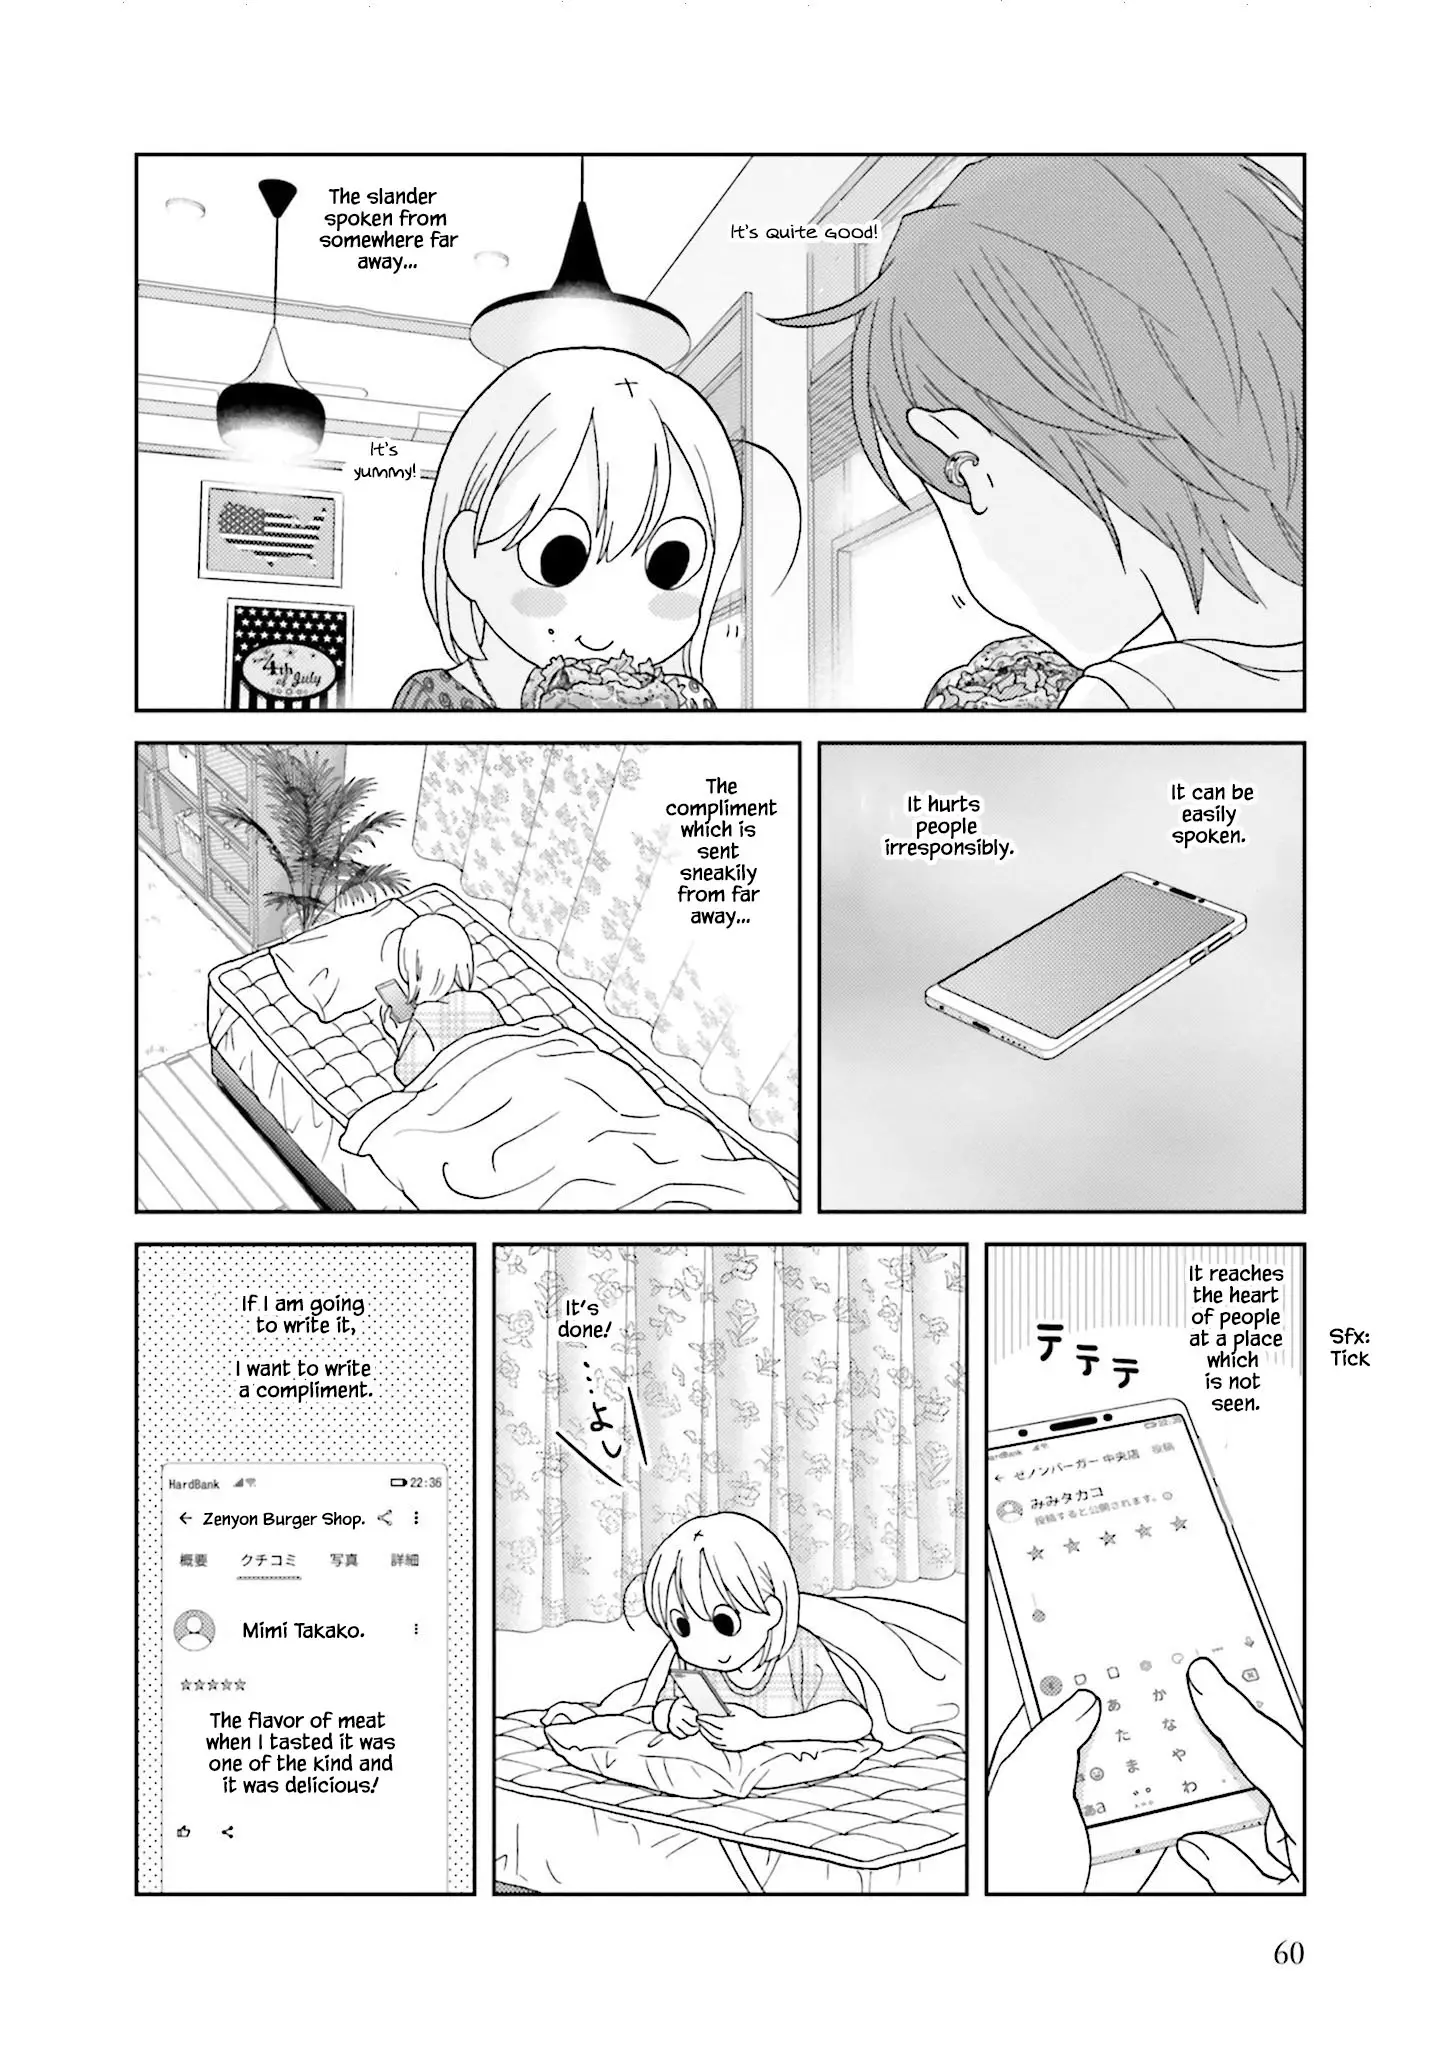 Takako-San - 69 page 8-686ccd21